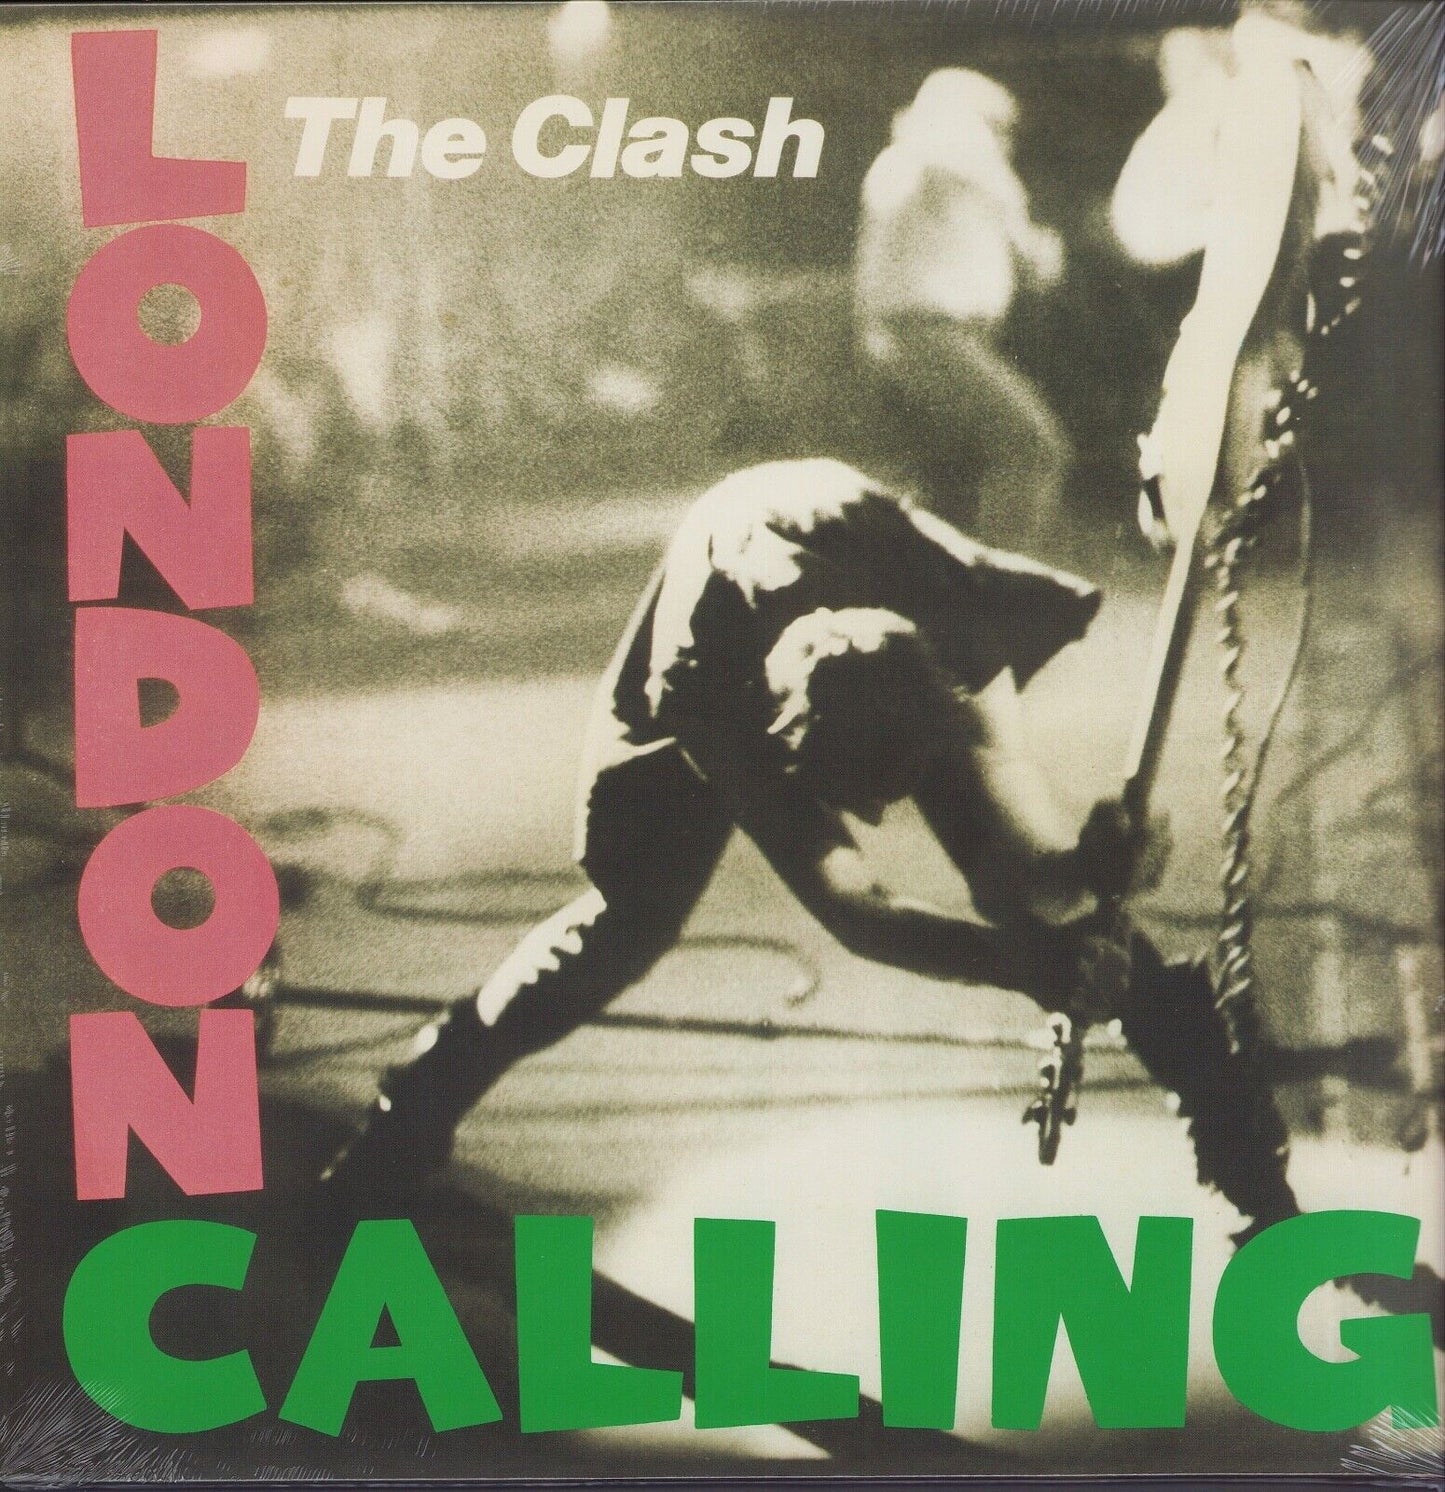 The Clash - London Calling Vinyl LP